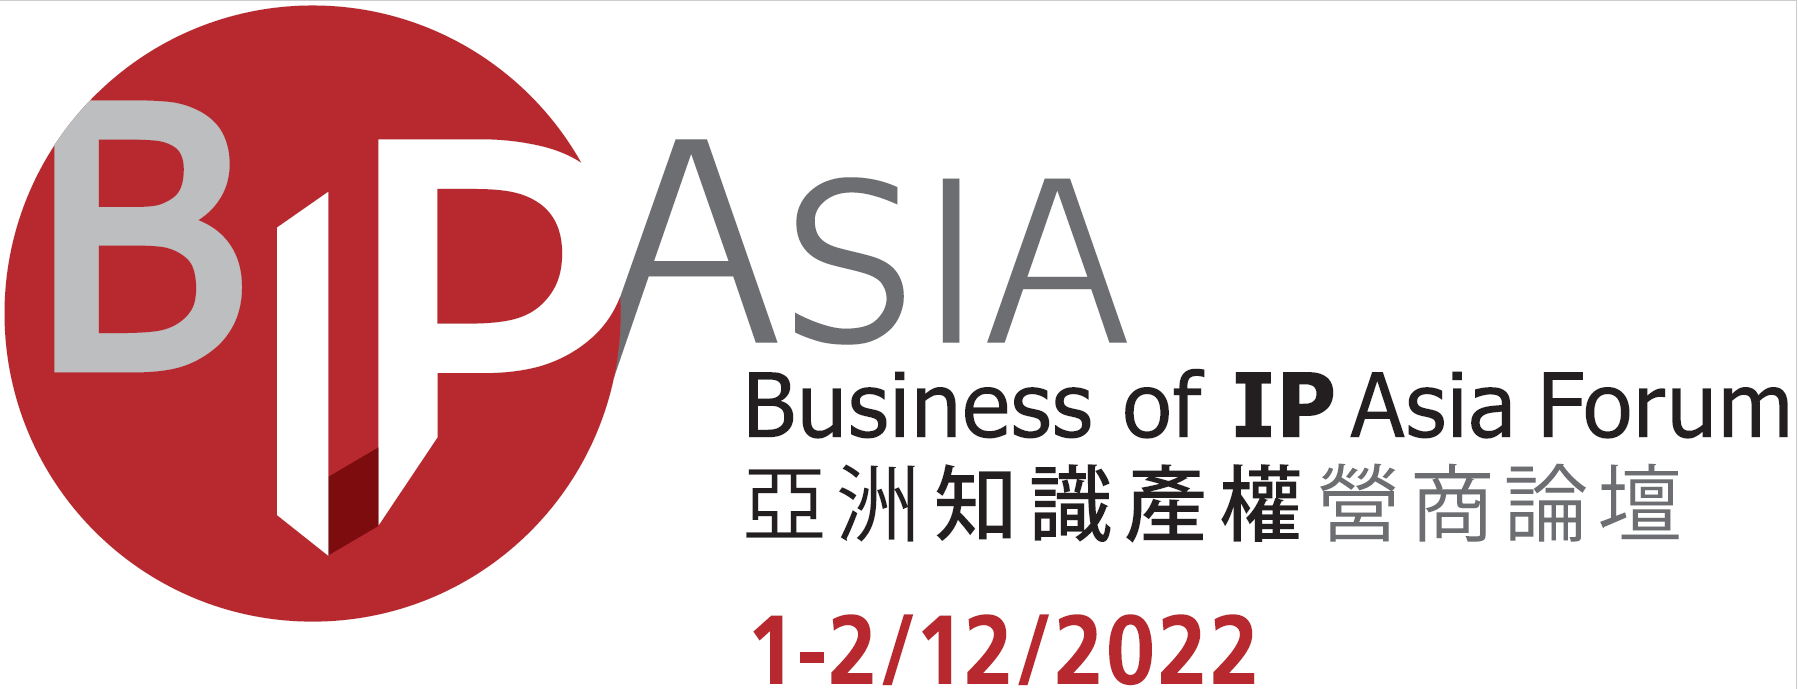 Termloto asia. Форум Азия. China Business forum логотип. Бизнес Азия дистрибуторская компания. Business forum.